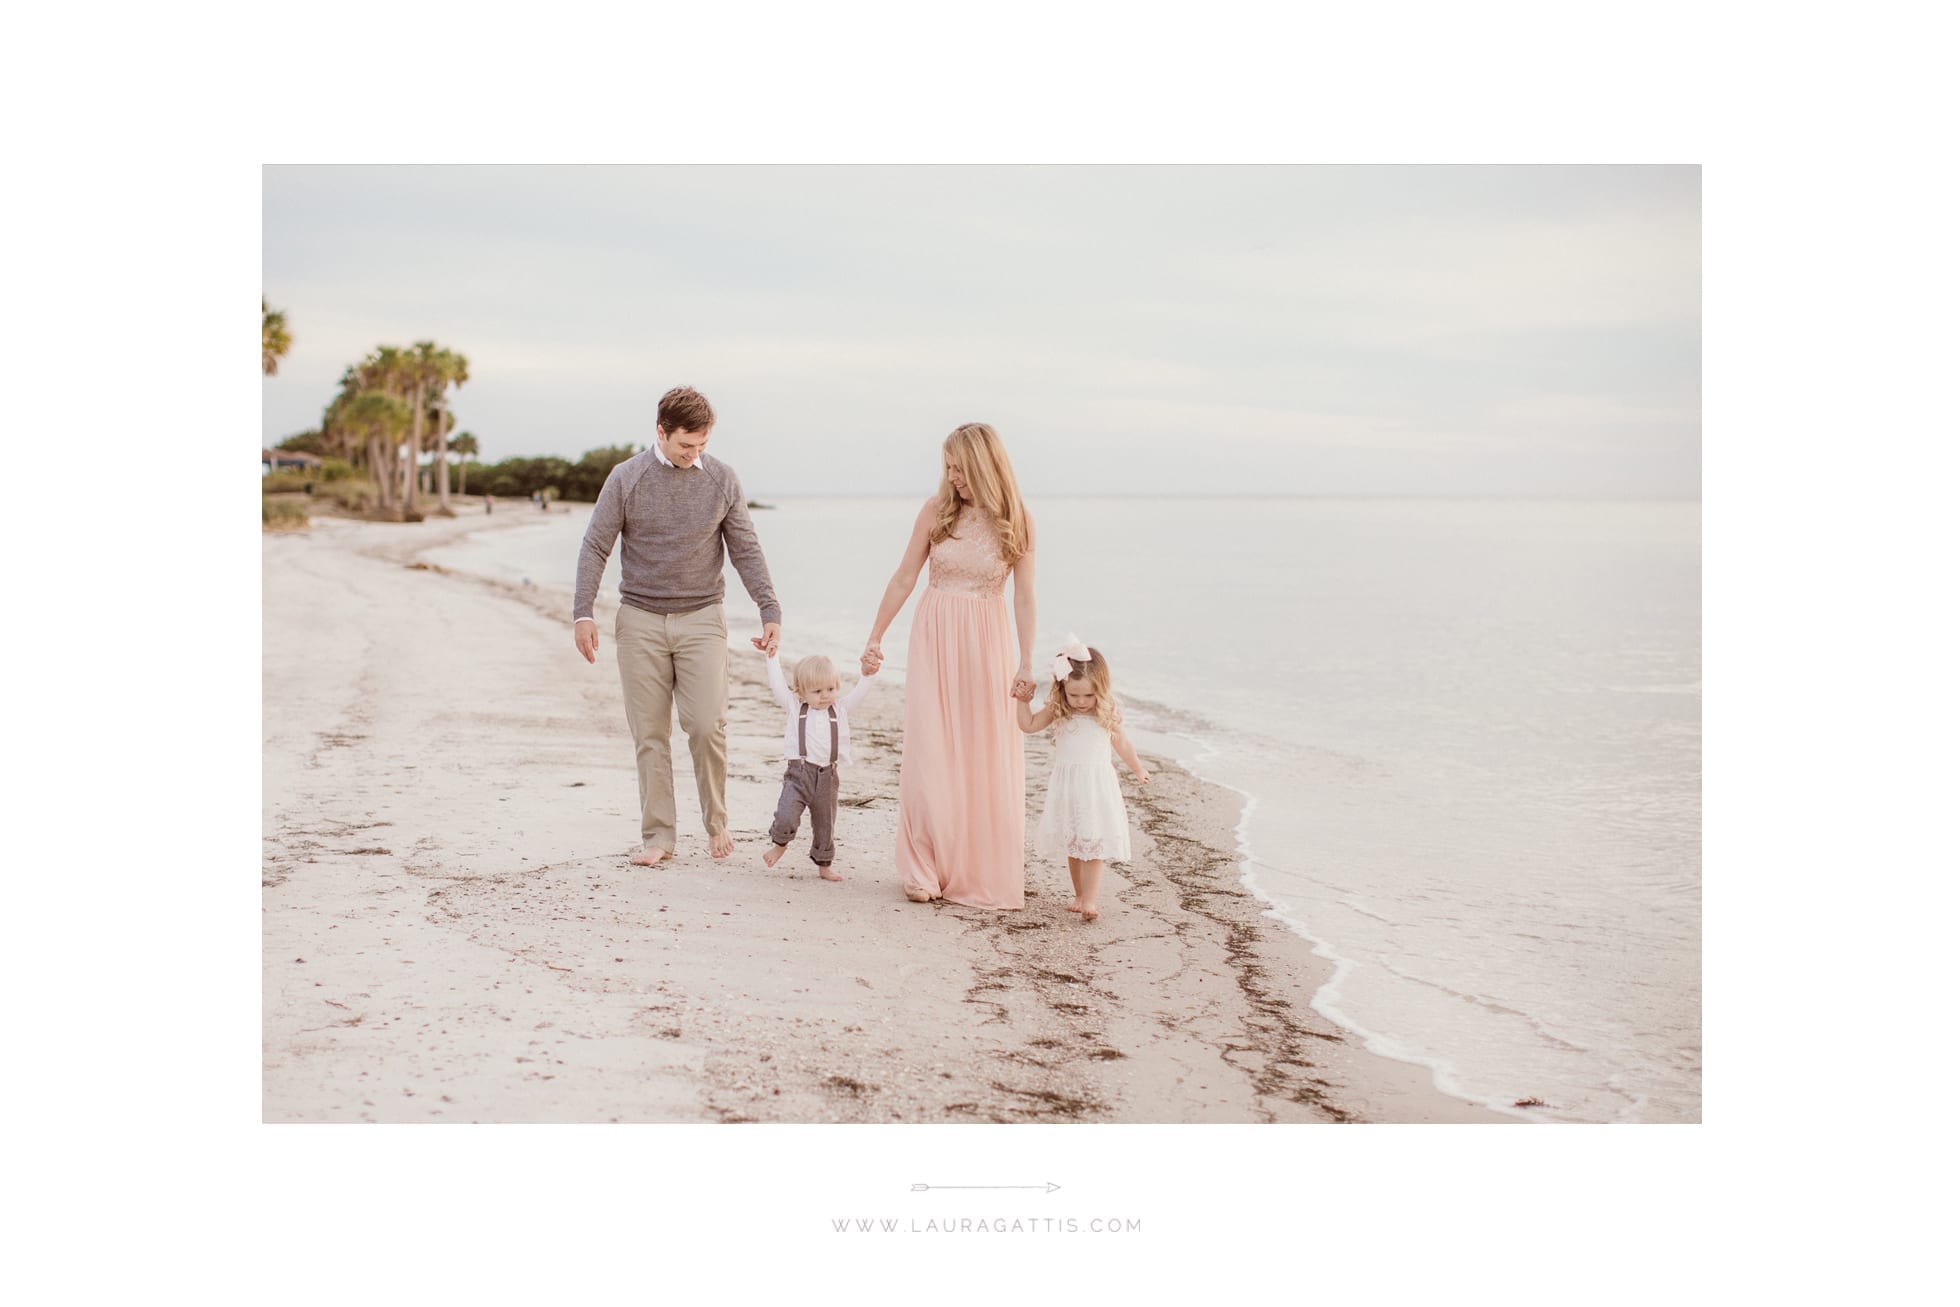 family beach session | laura gattis photography